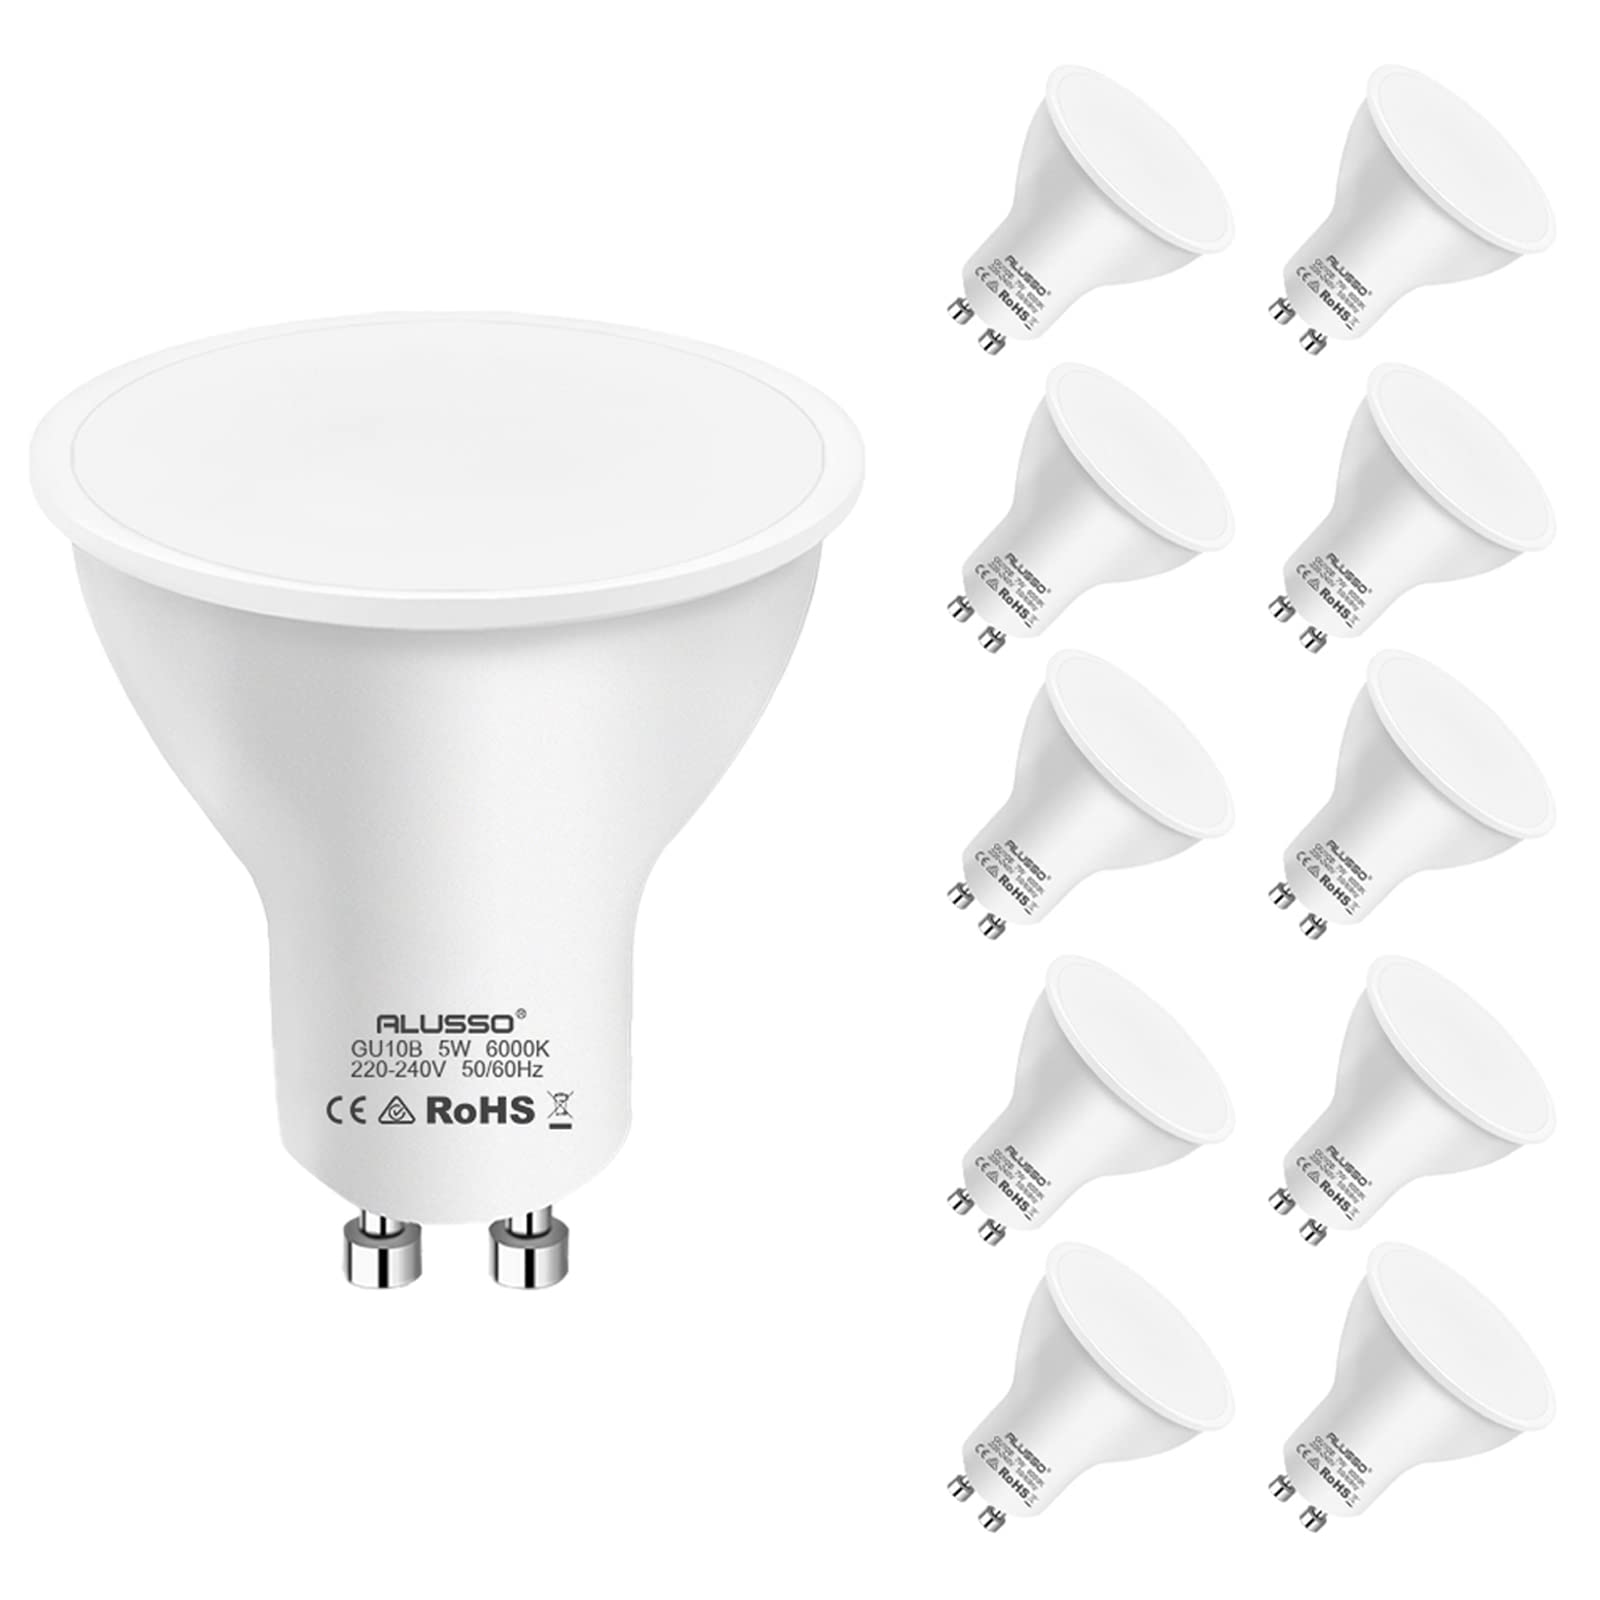 ALUSSO 5W GU10 LED Bulbs, 35W GU10 Halogen Spotlight Bulb Equivalent, Cool White 6000K Energy Saving Light Bulb, 120° Beam Angle, Pack of 10